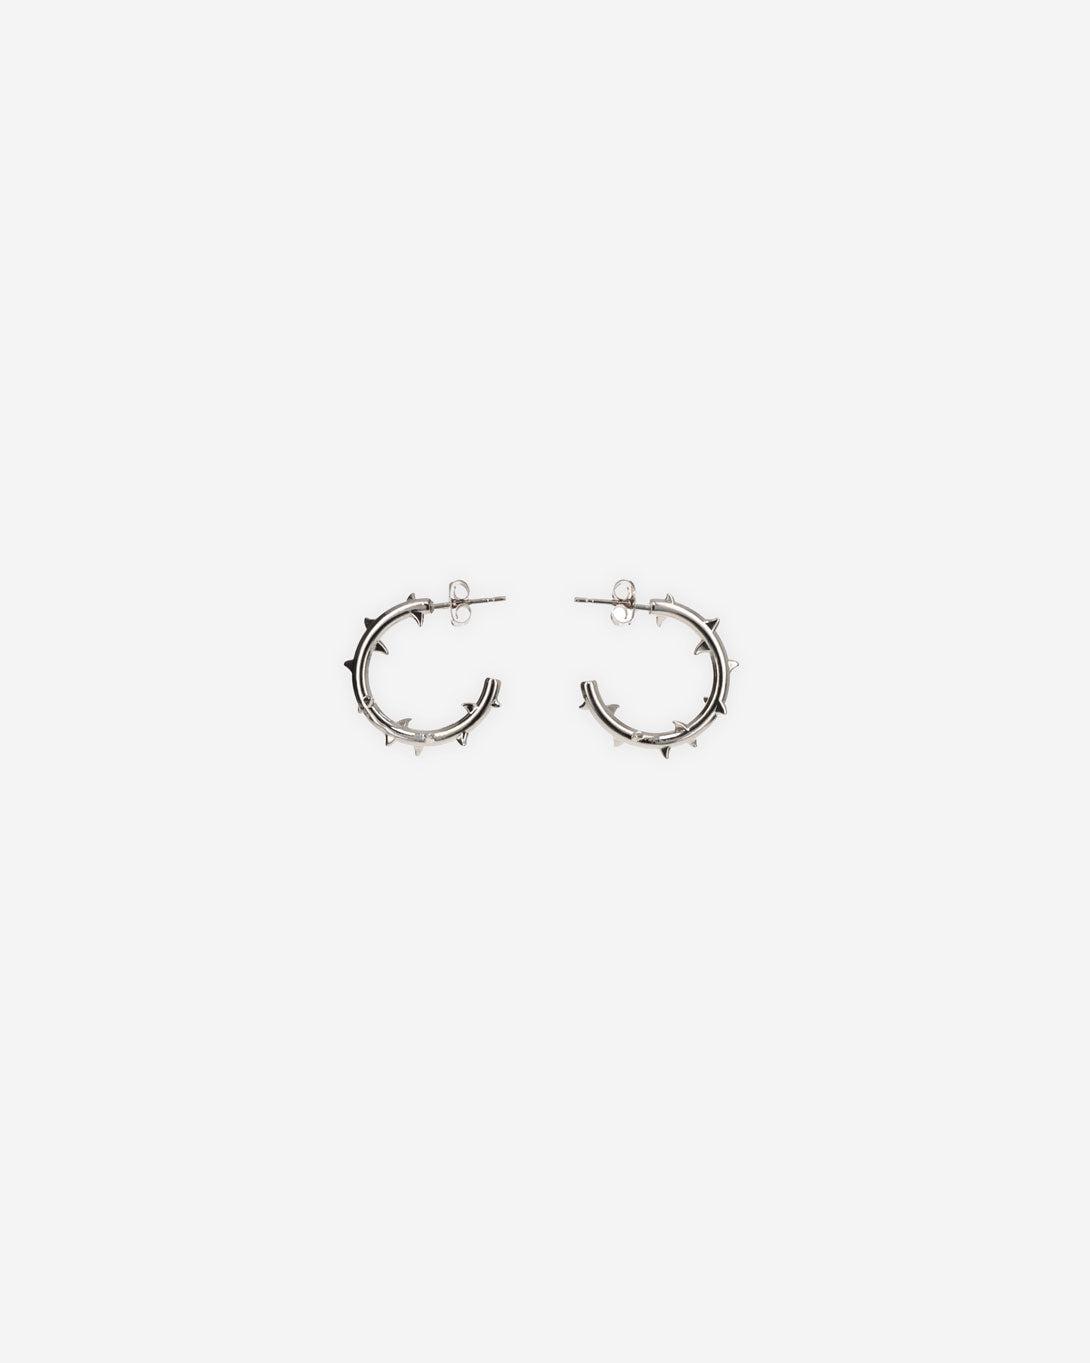 Hirschy Earrings - Jewelry - Justine Clenquet - Elevastor